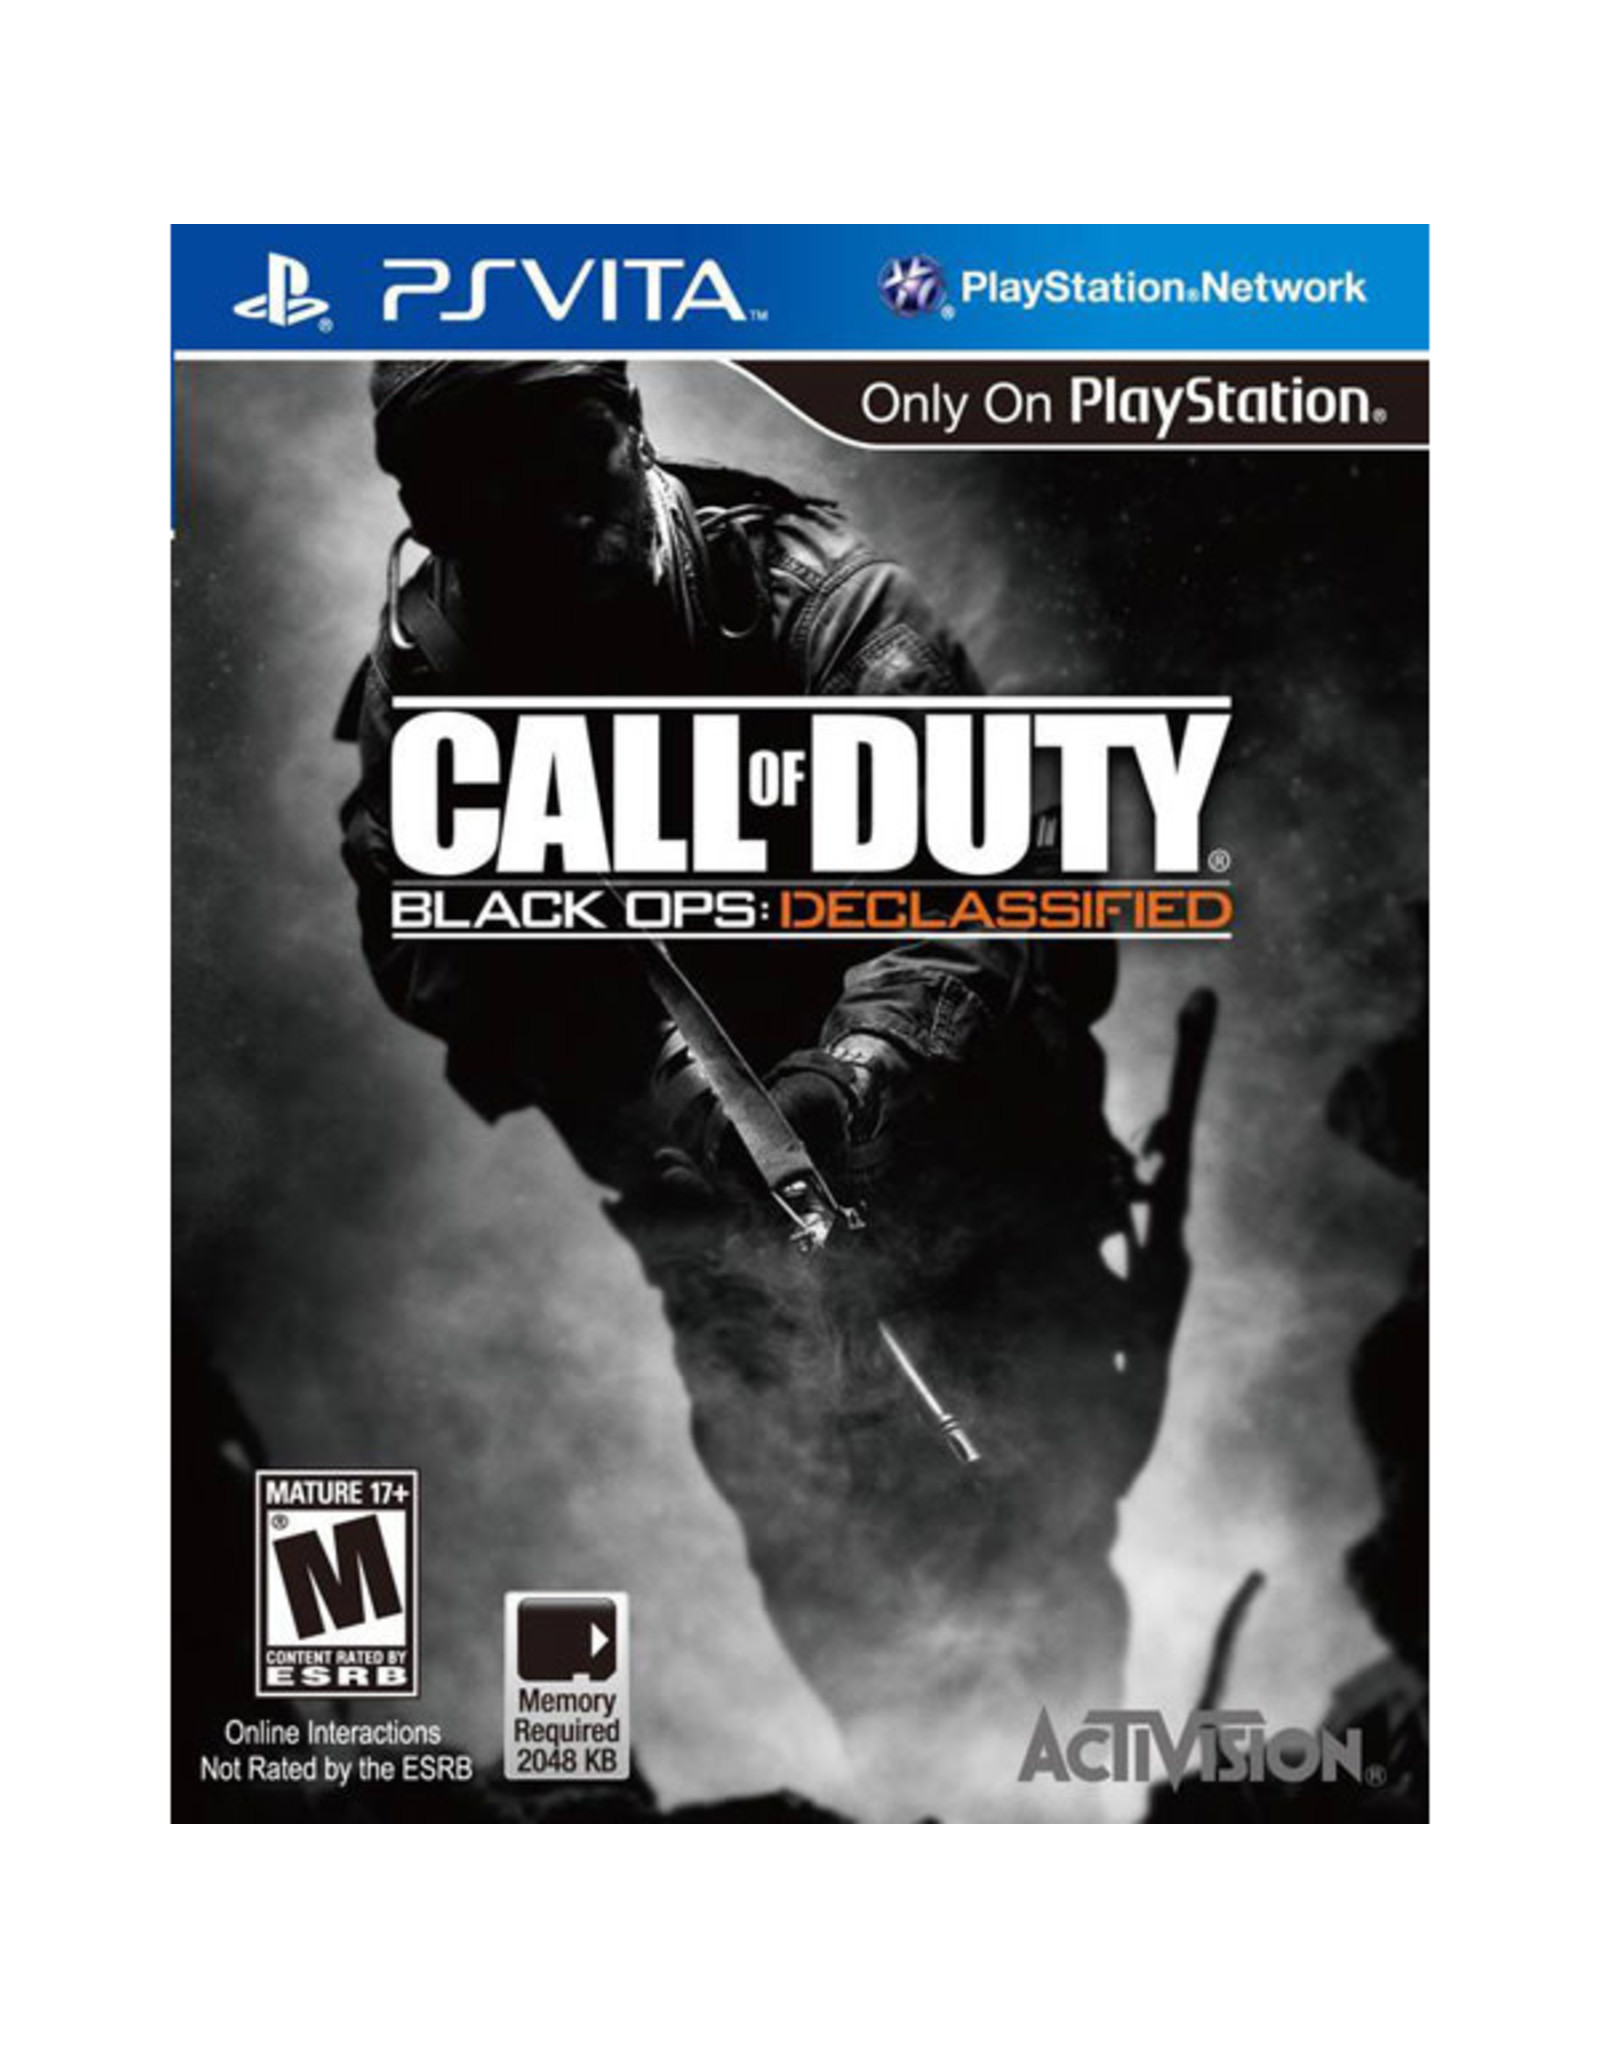 Playstation Vita Call of Duty Black Ops Declassified (CiB)